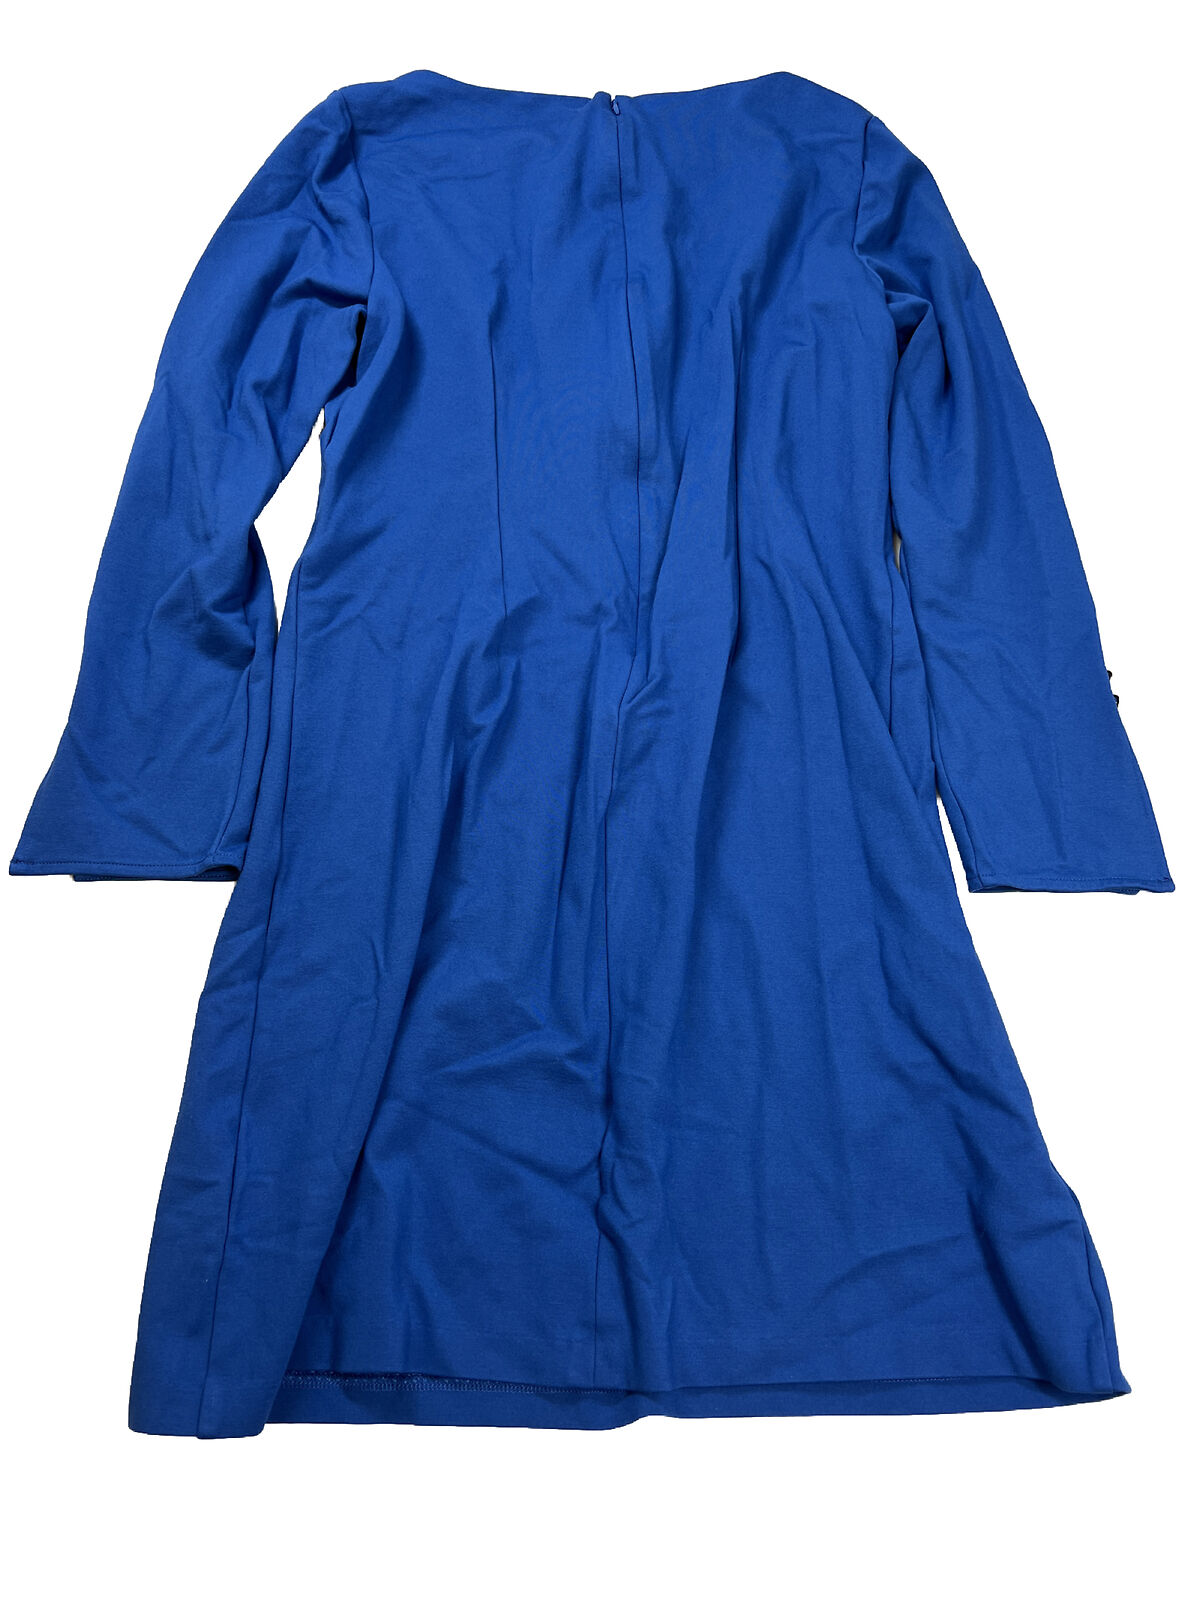 Ann Taylor Women's Blue Long Sleeve Sheath Dress - M